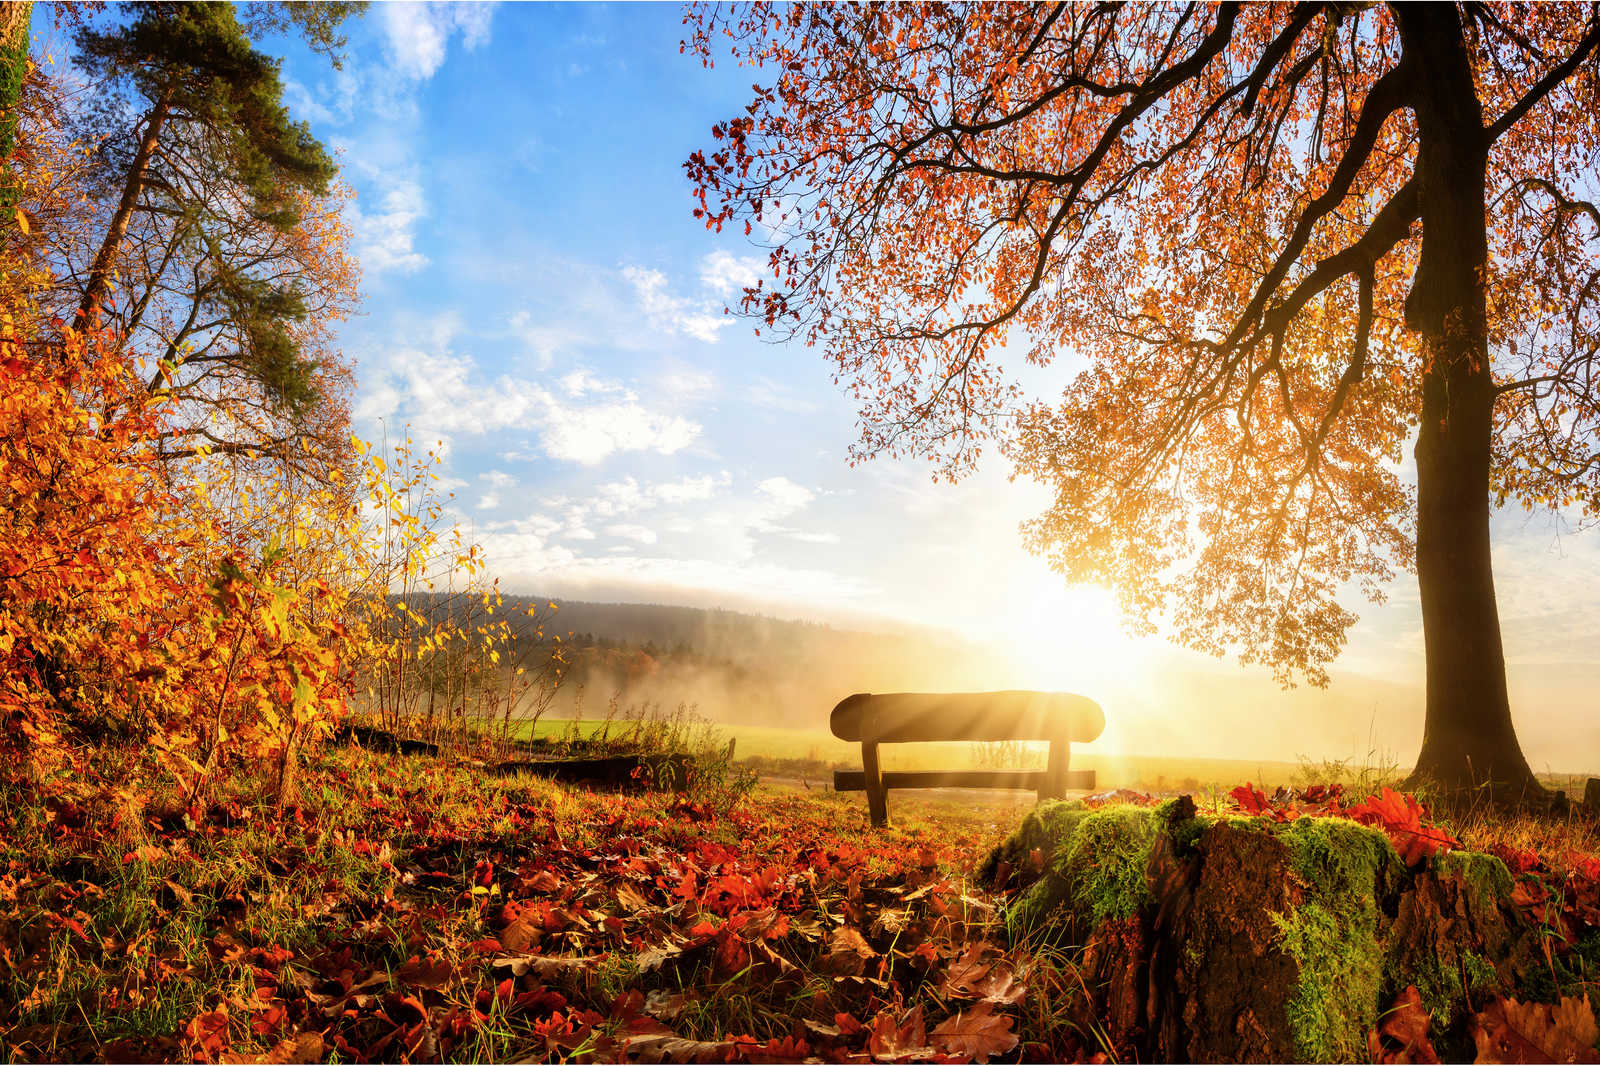             Leinwandbild Bank im Wald an einem Herbstmorgen – 1,20 m x 0,80 m
        